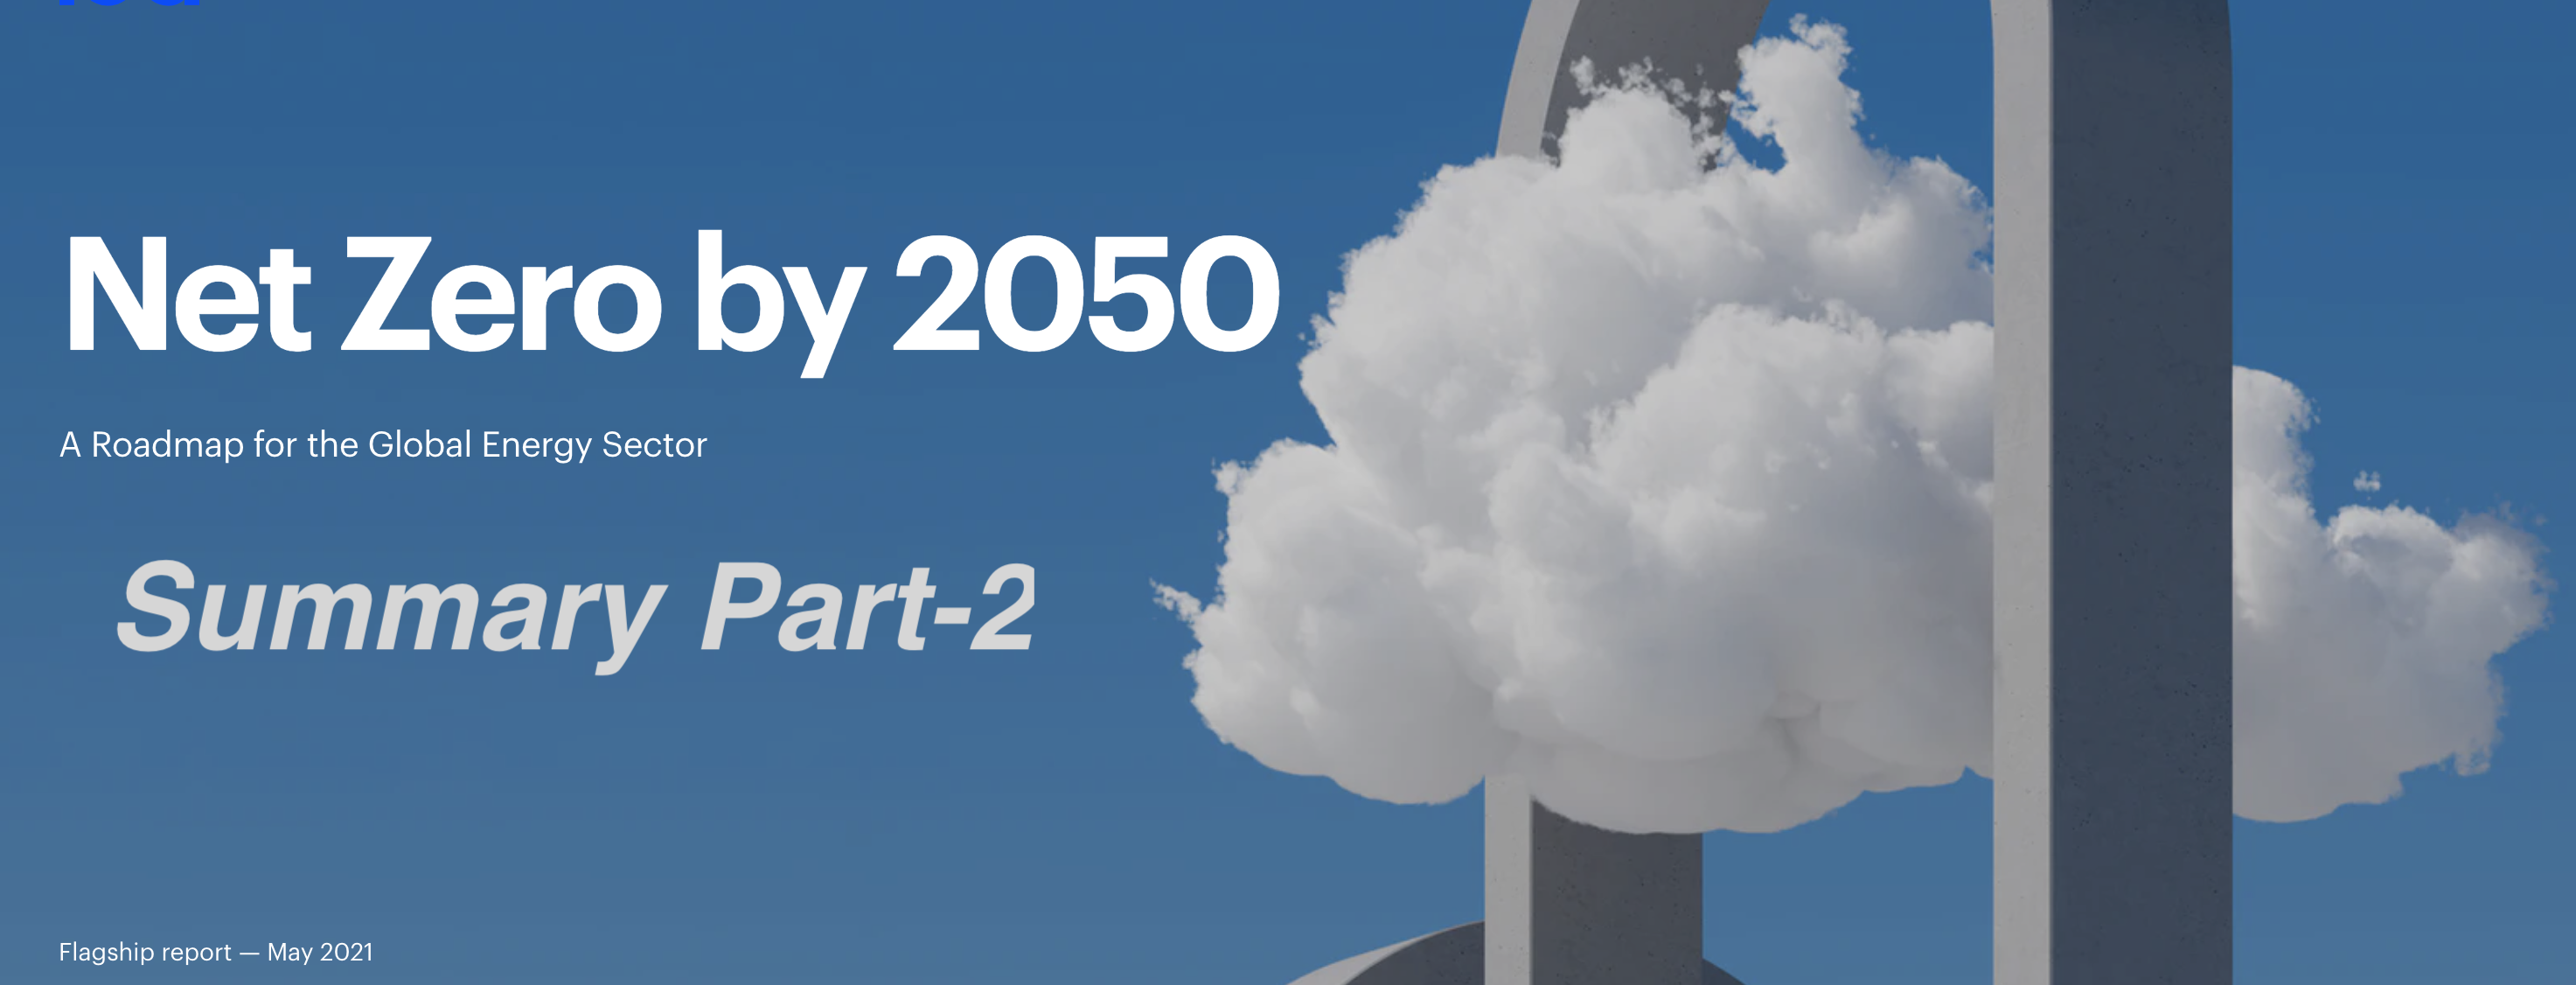 IEA Net Zero 2050 Summary / Part 2